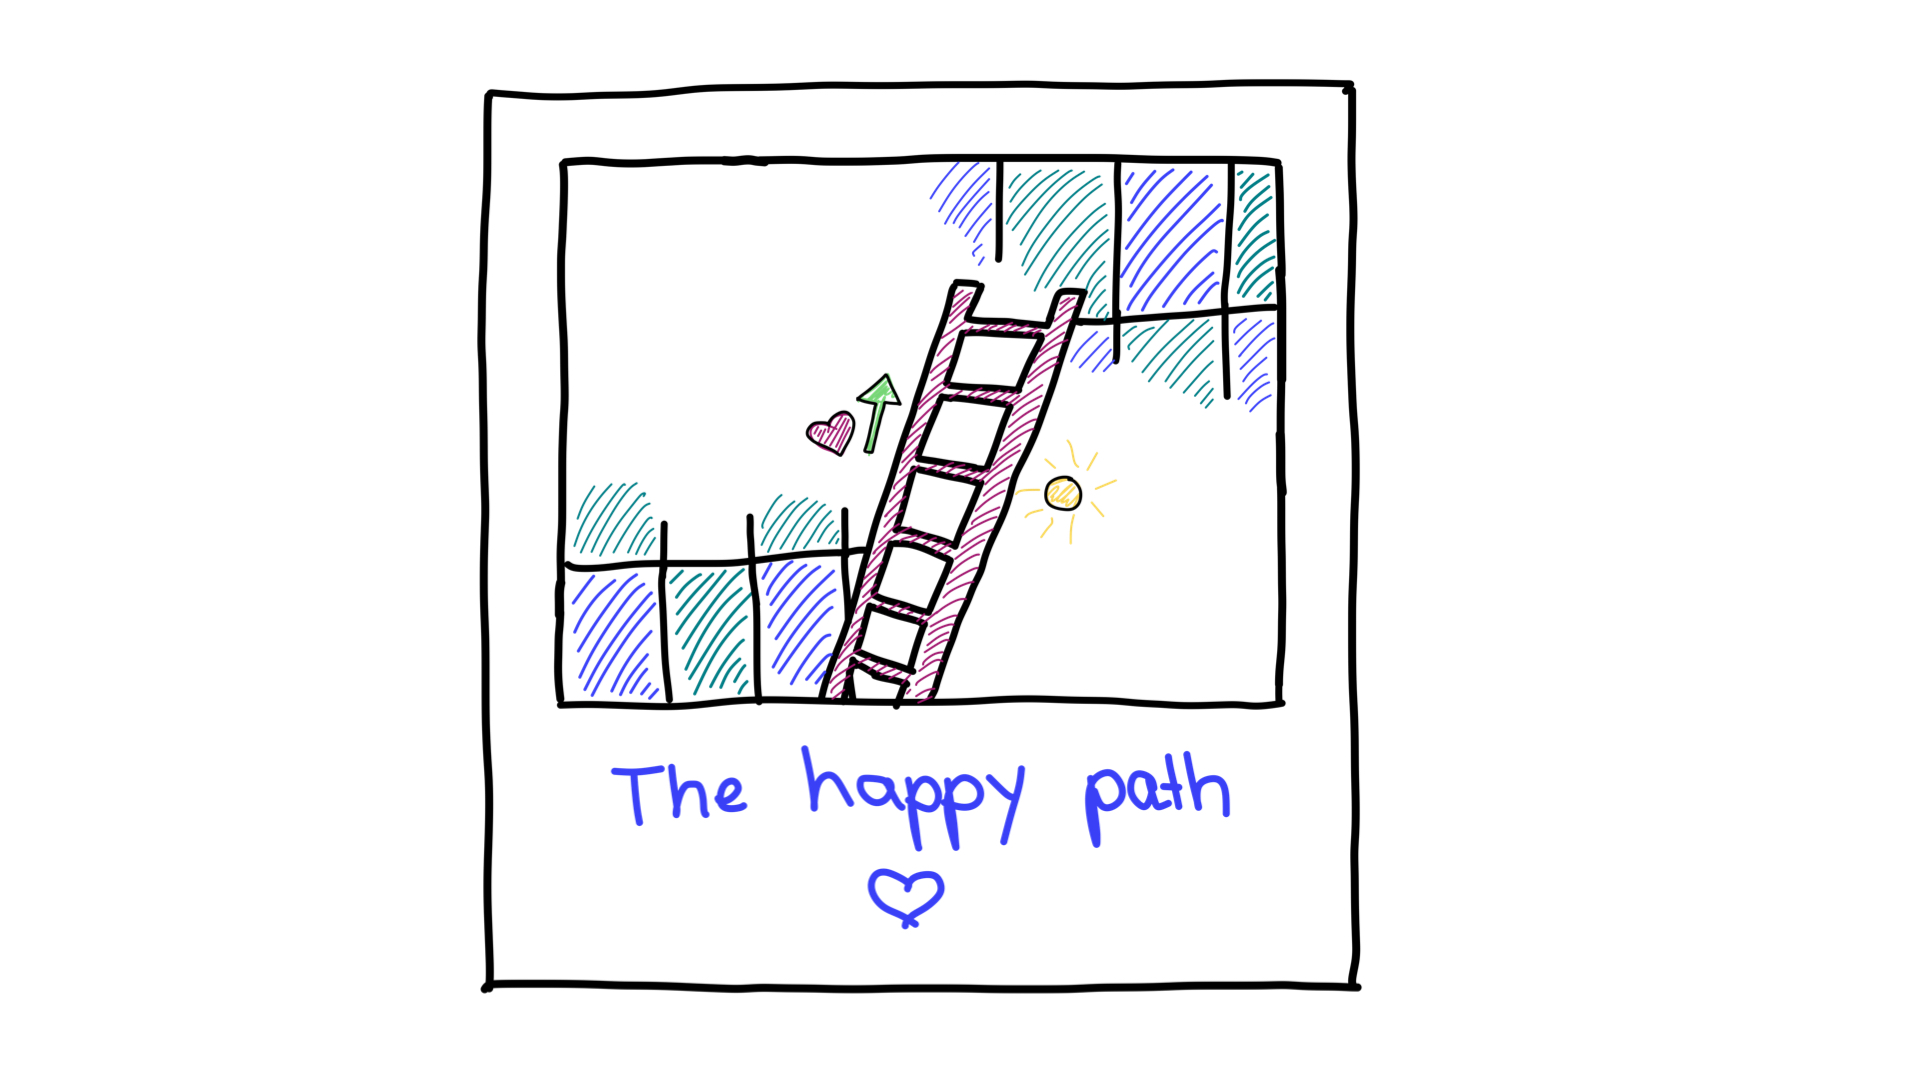 The happy path.